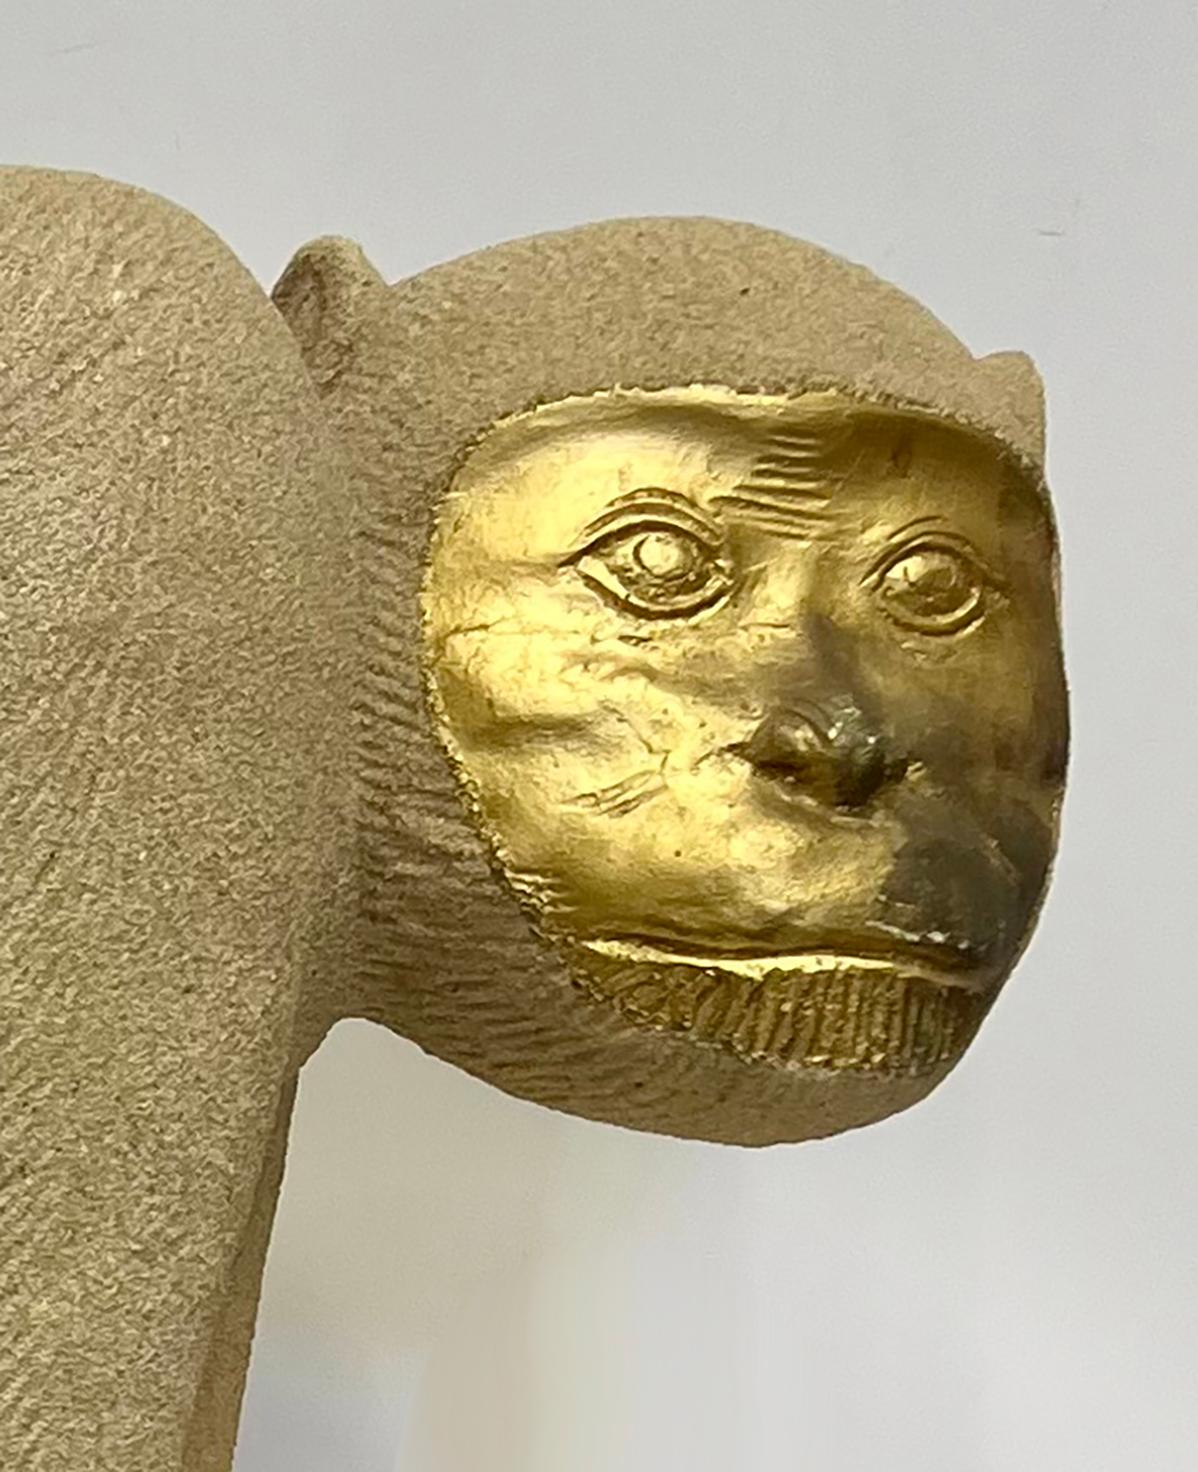 Life Size 1980s Pop-Art Monkey Sculpture With Gilt Accents For Sale 2